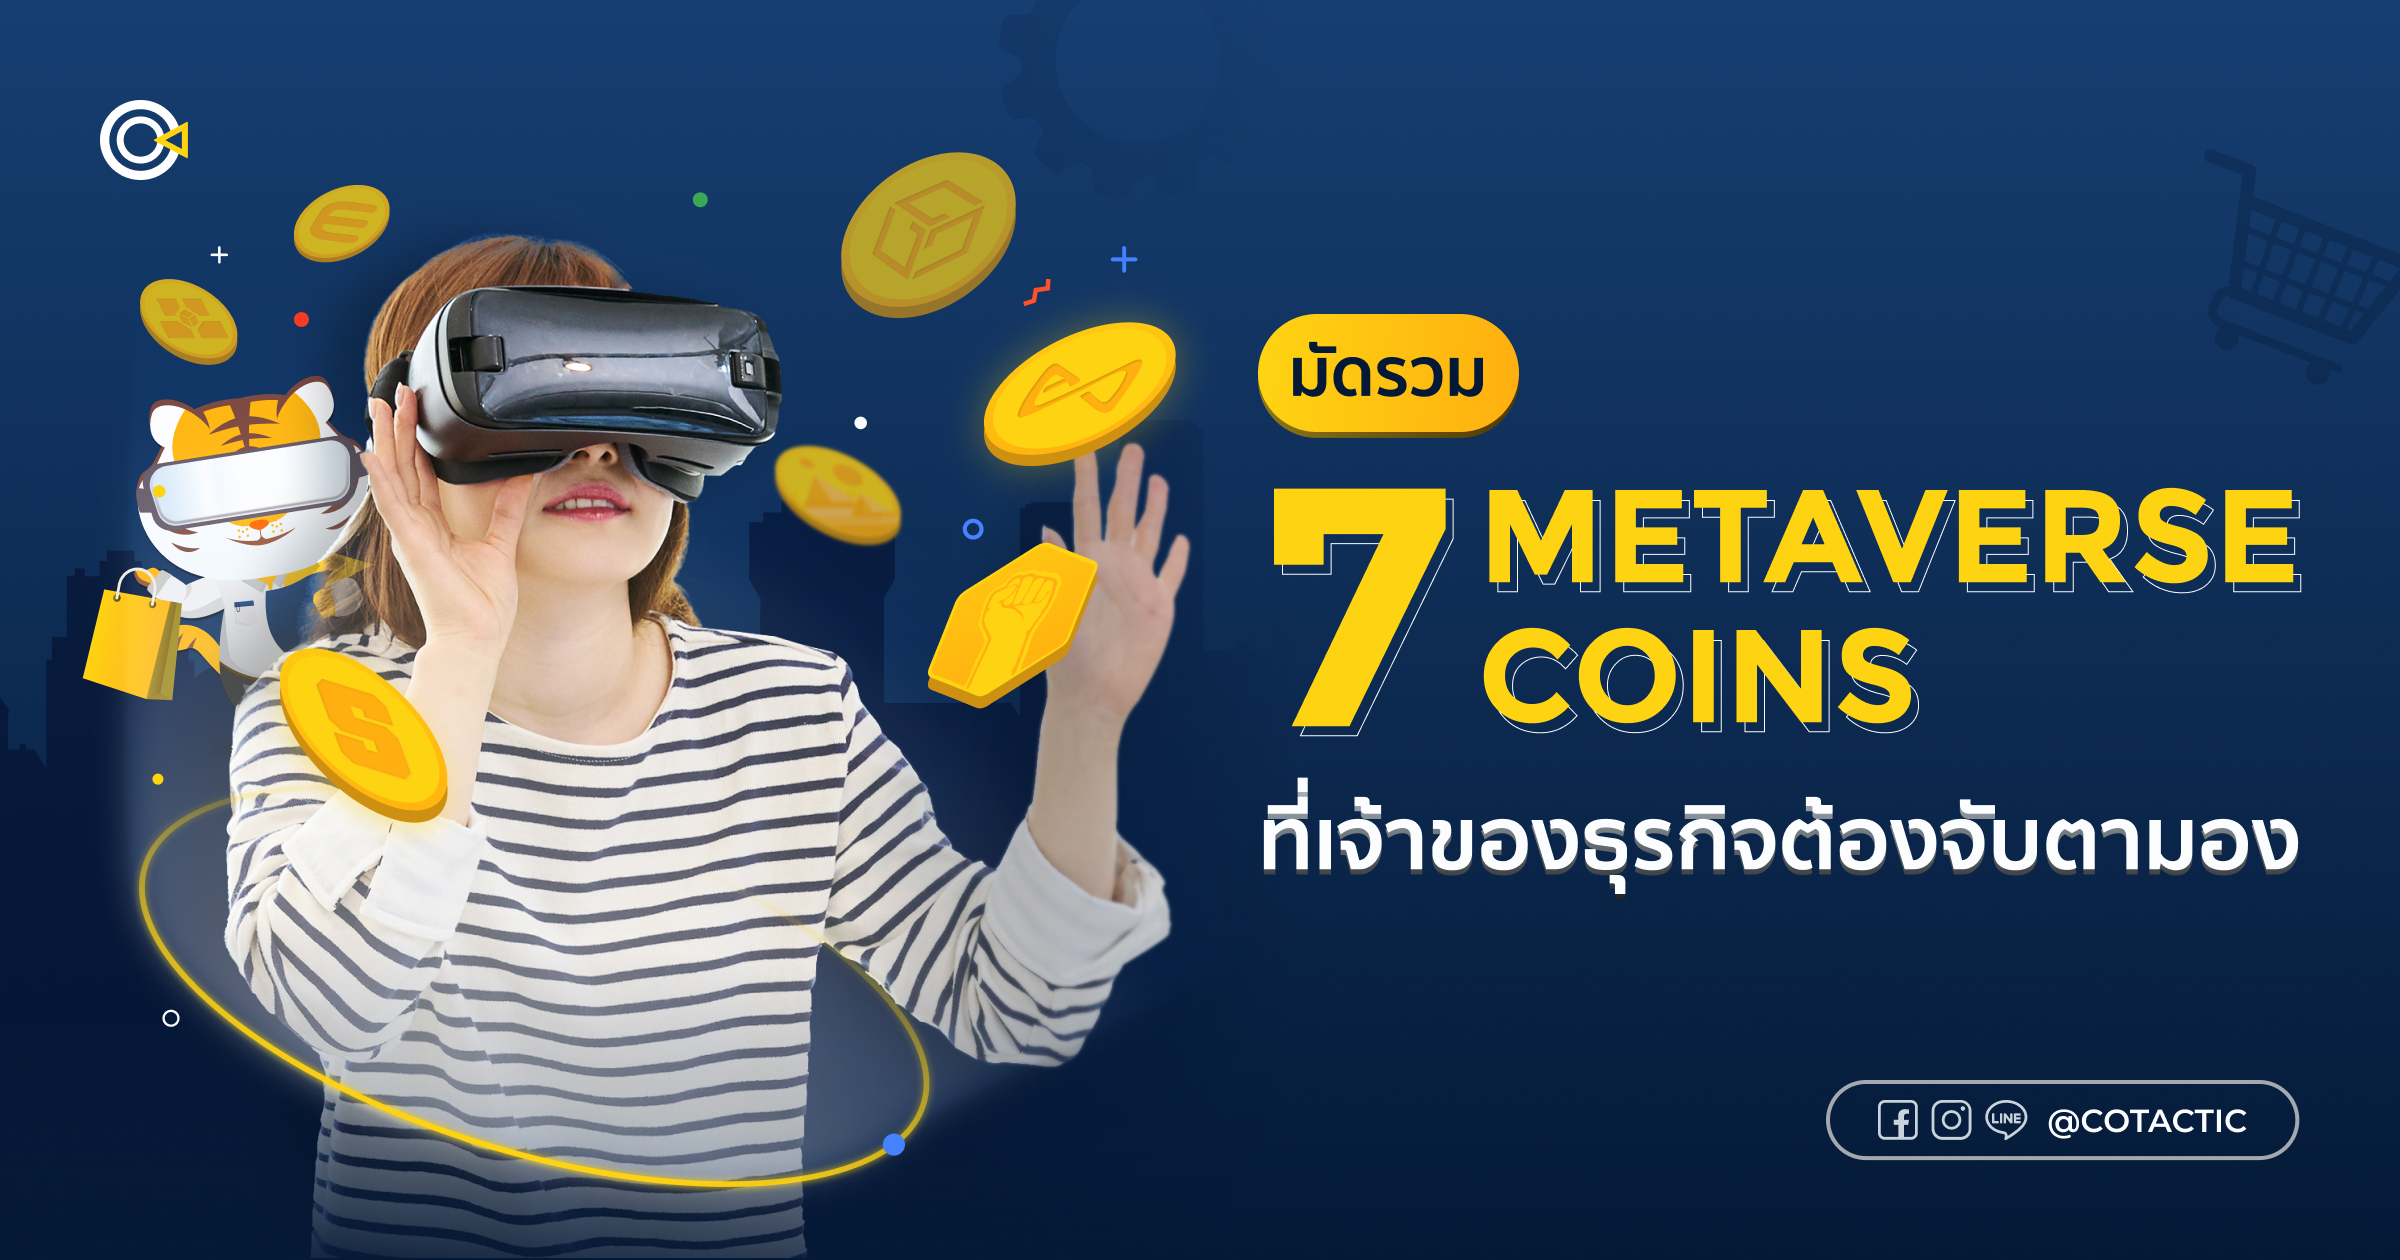 Metaverse Coins ที่เจ้าของธุรกิจต้องจับตามอง-เทรนด์ Meta น่าลงทุนในปี 2022